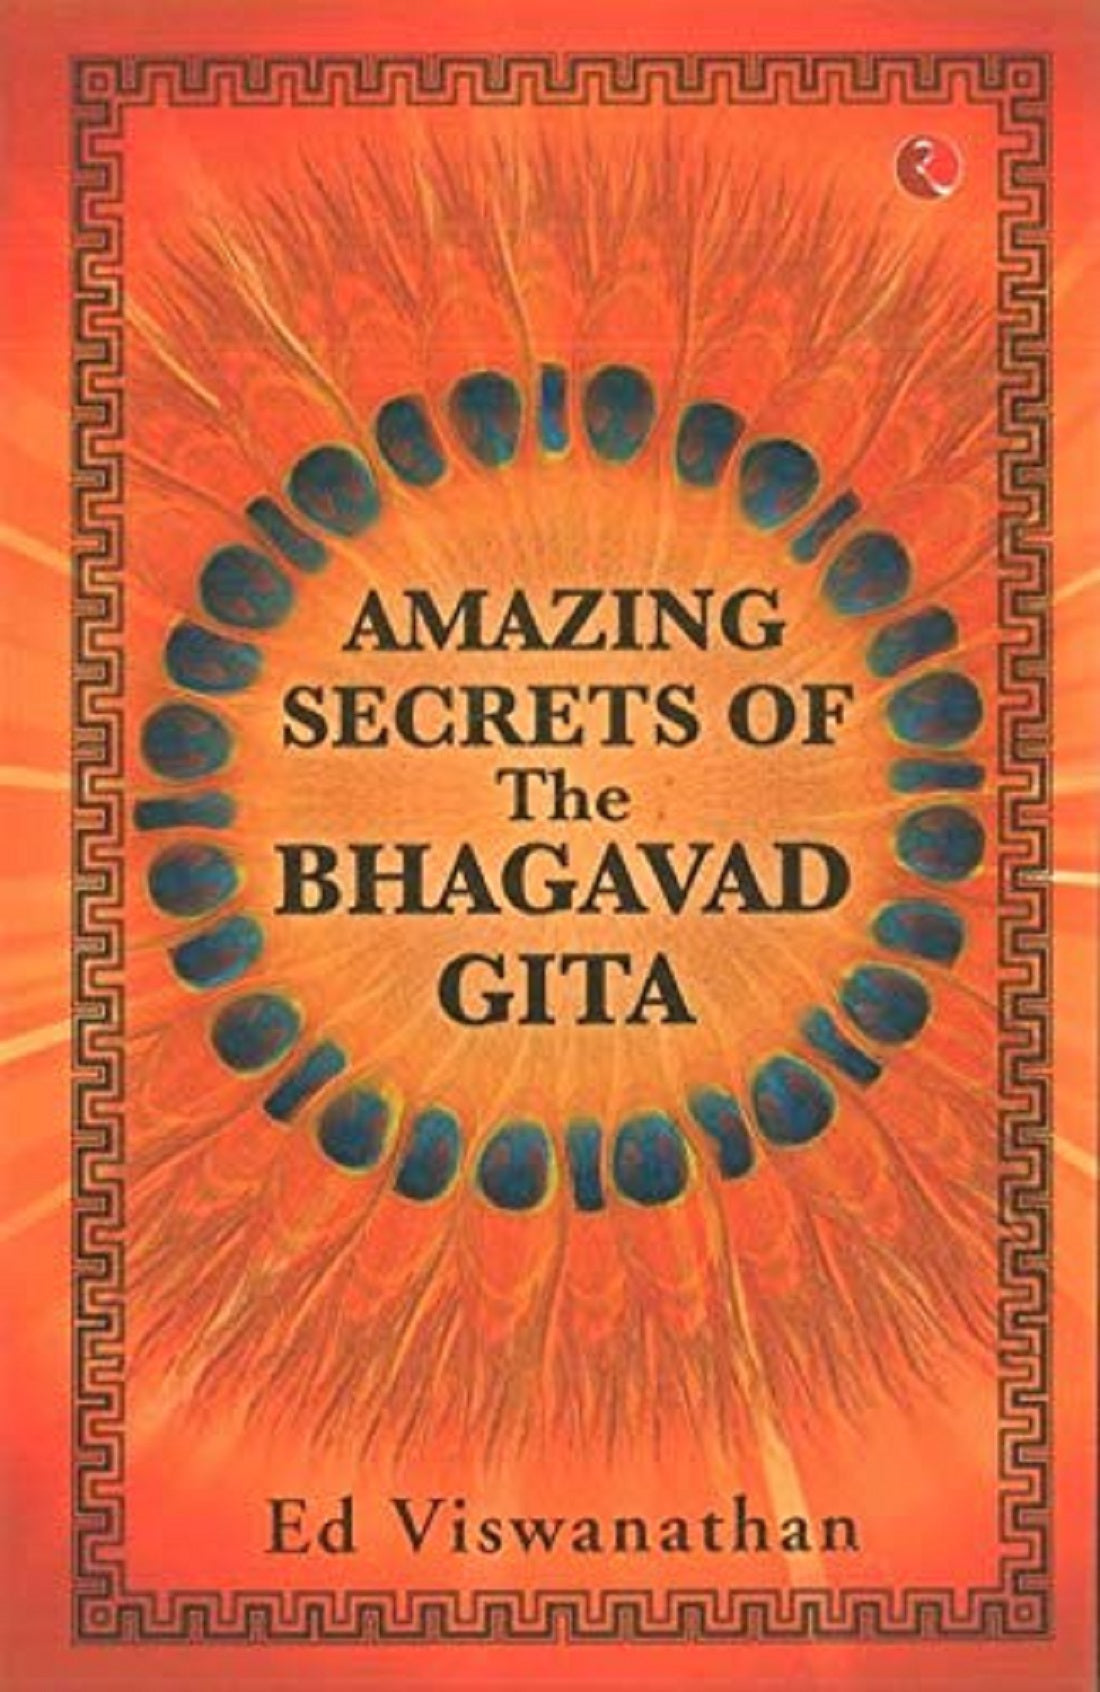 AMAZING SECRETS OF THE BHAGAVAD GITA